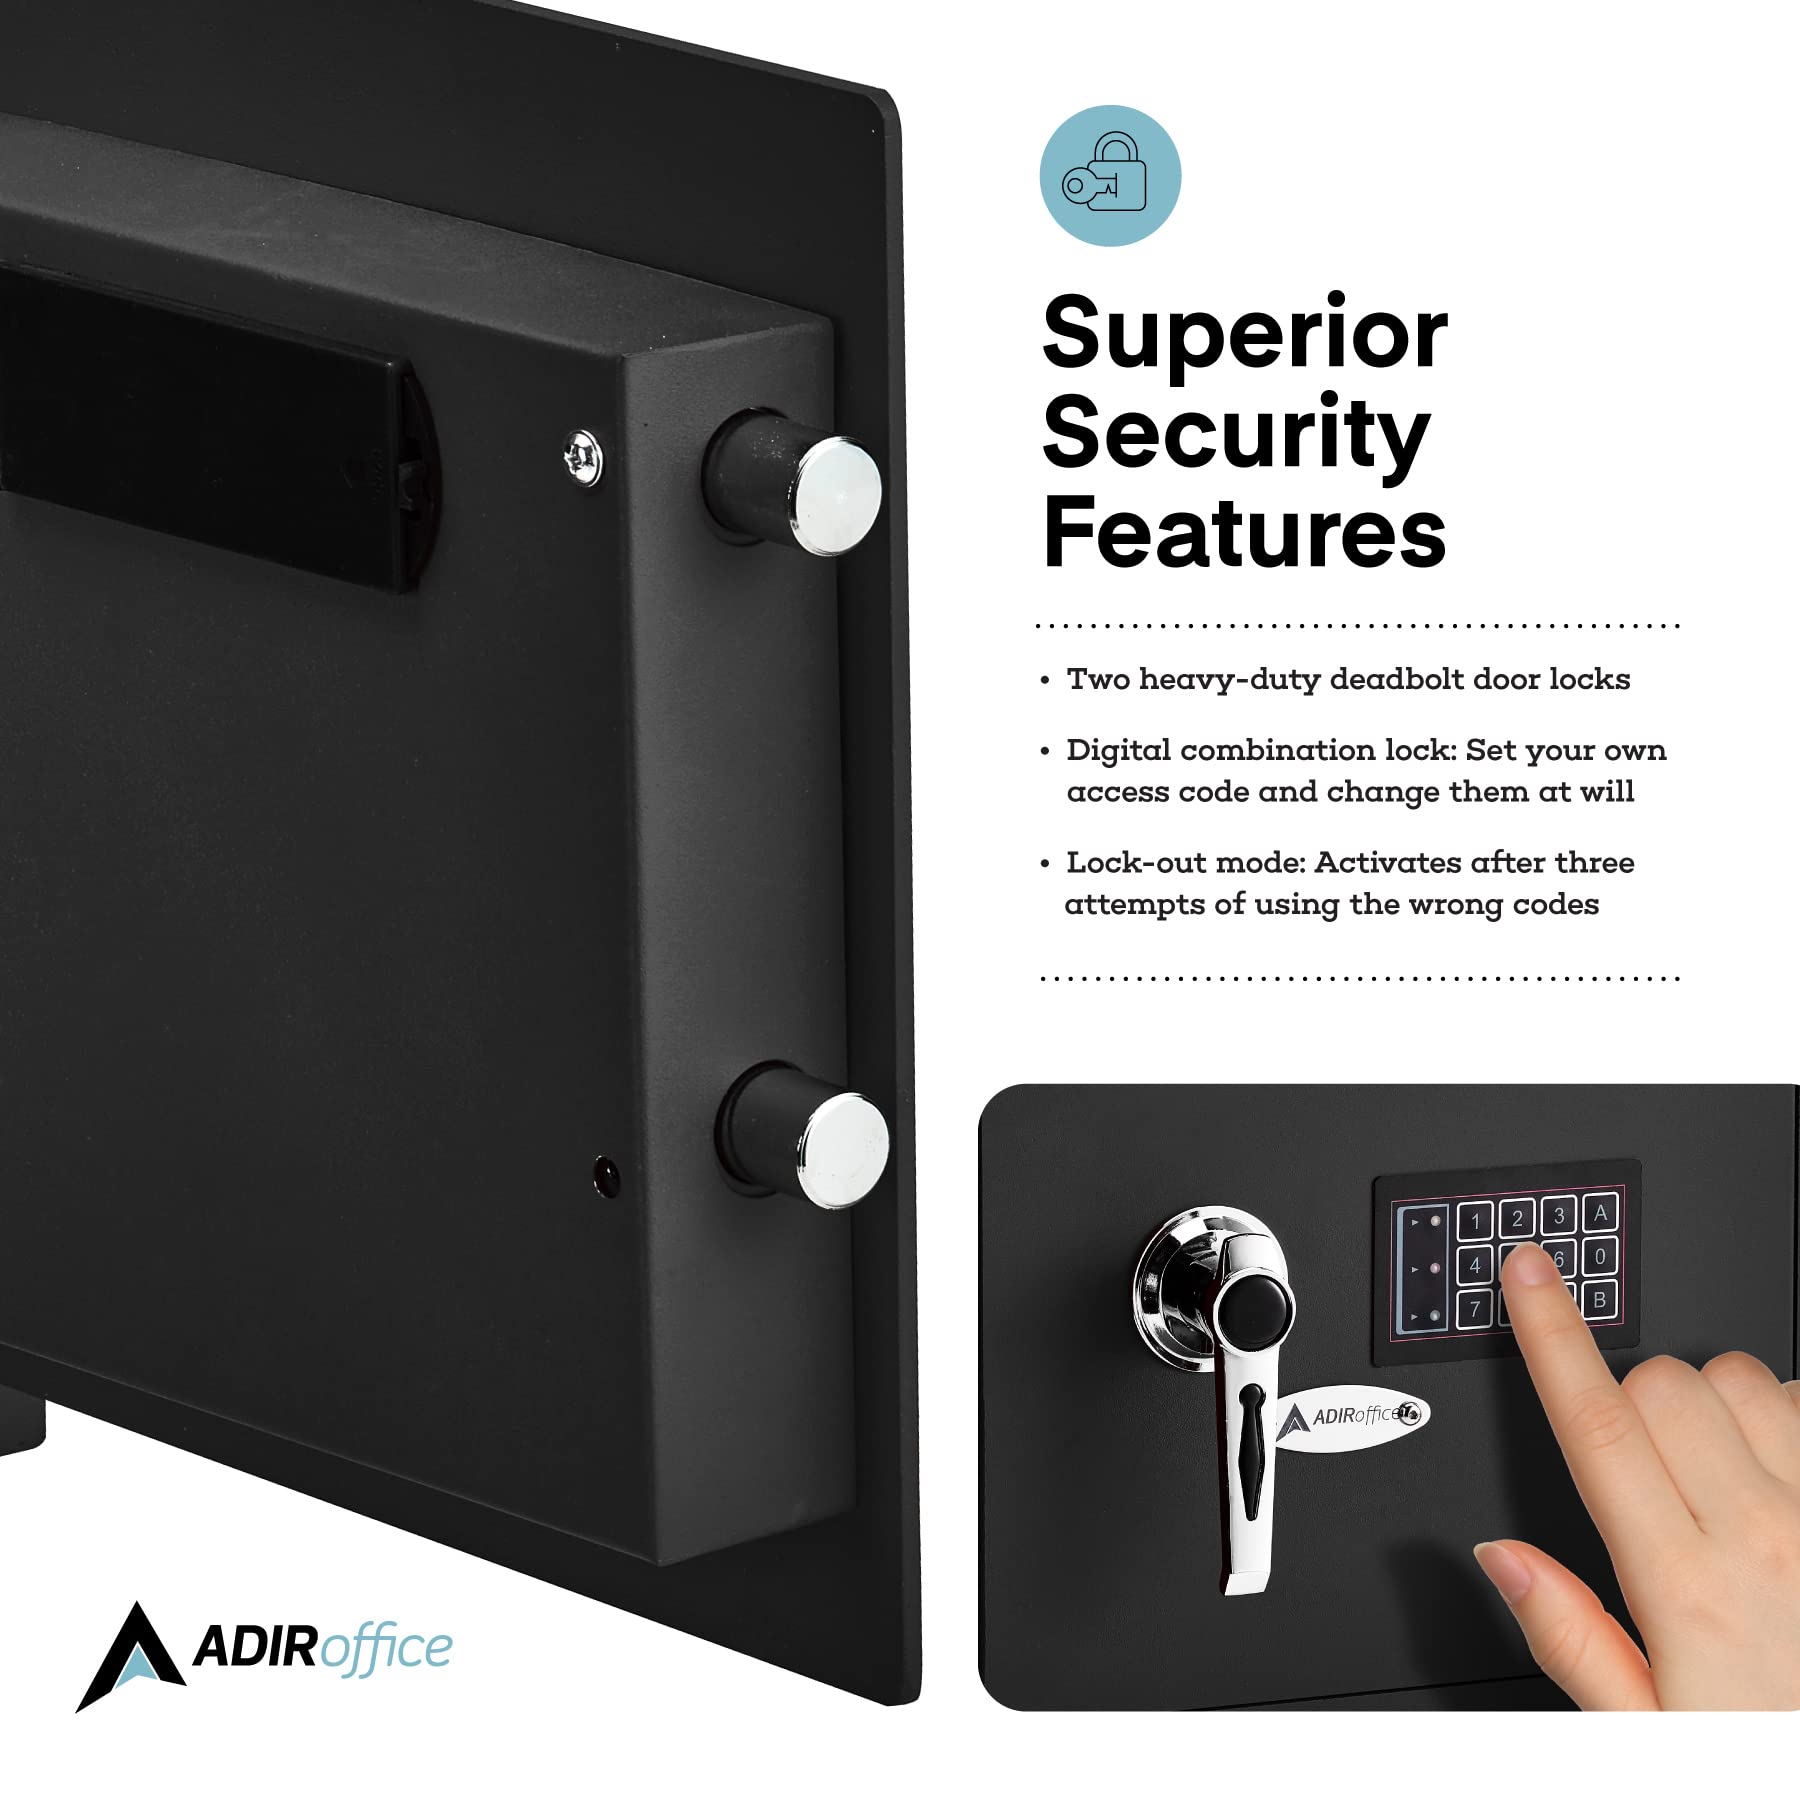 AdirOffice Digital Depository Safe - Front Loading - Digital Keypad Lock - Lockout Mode (Black)